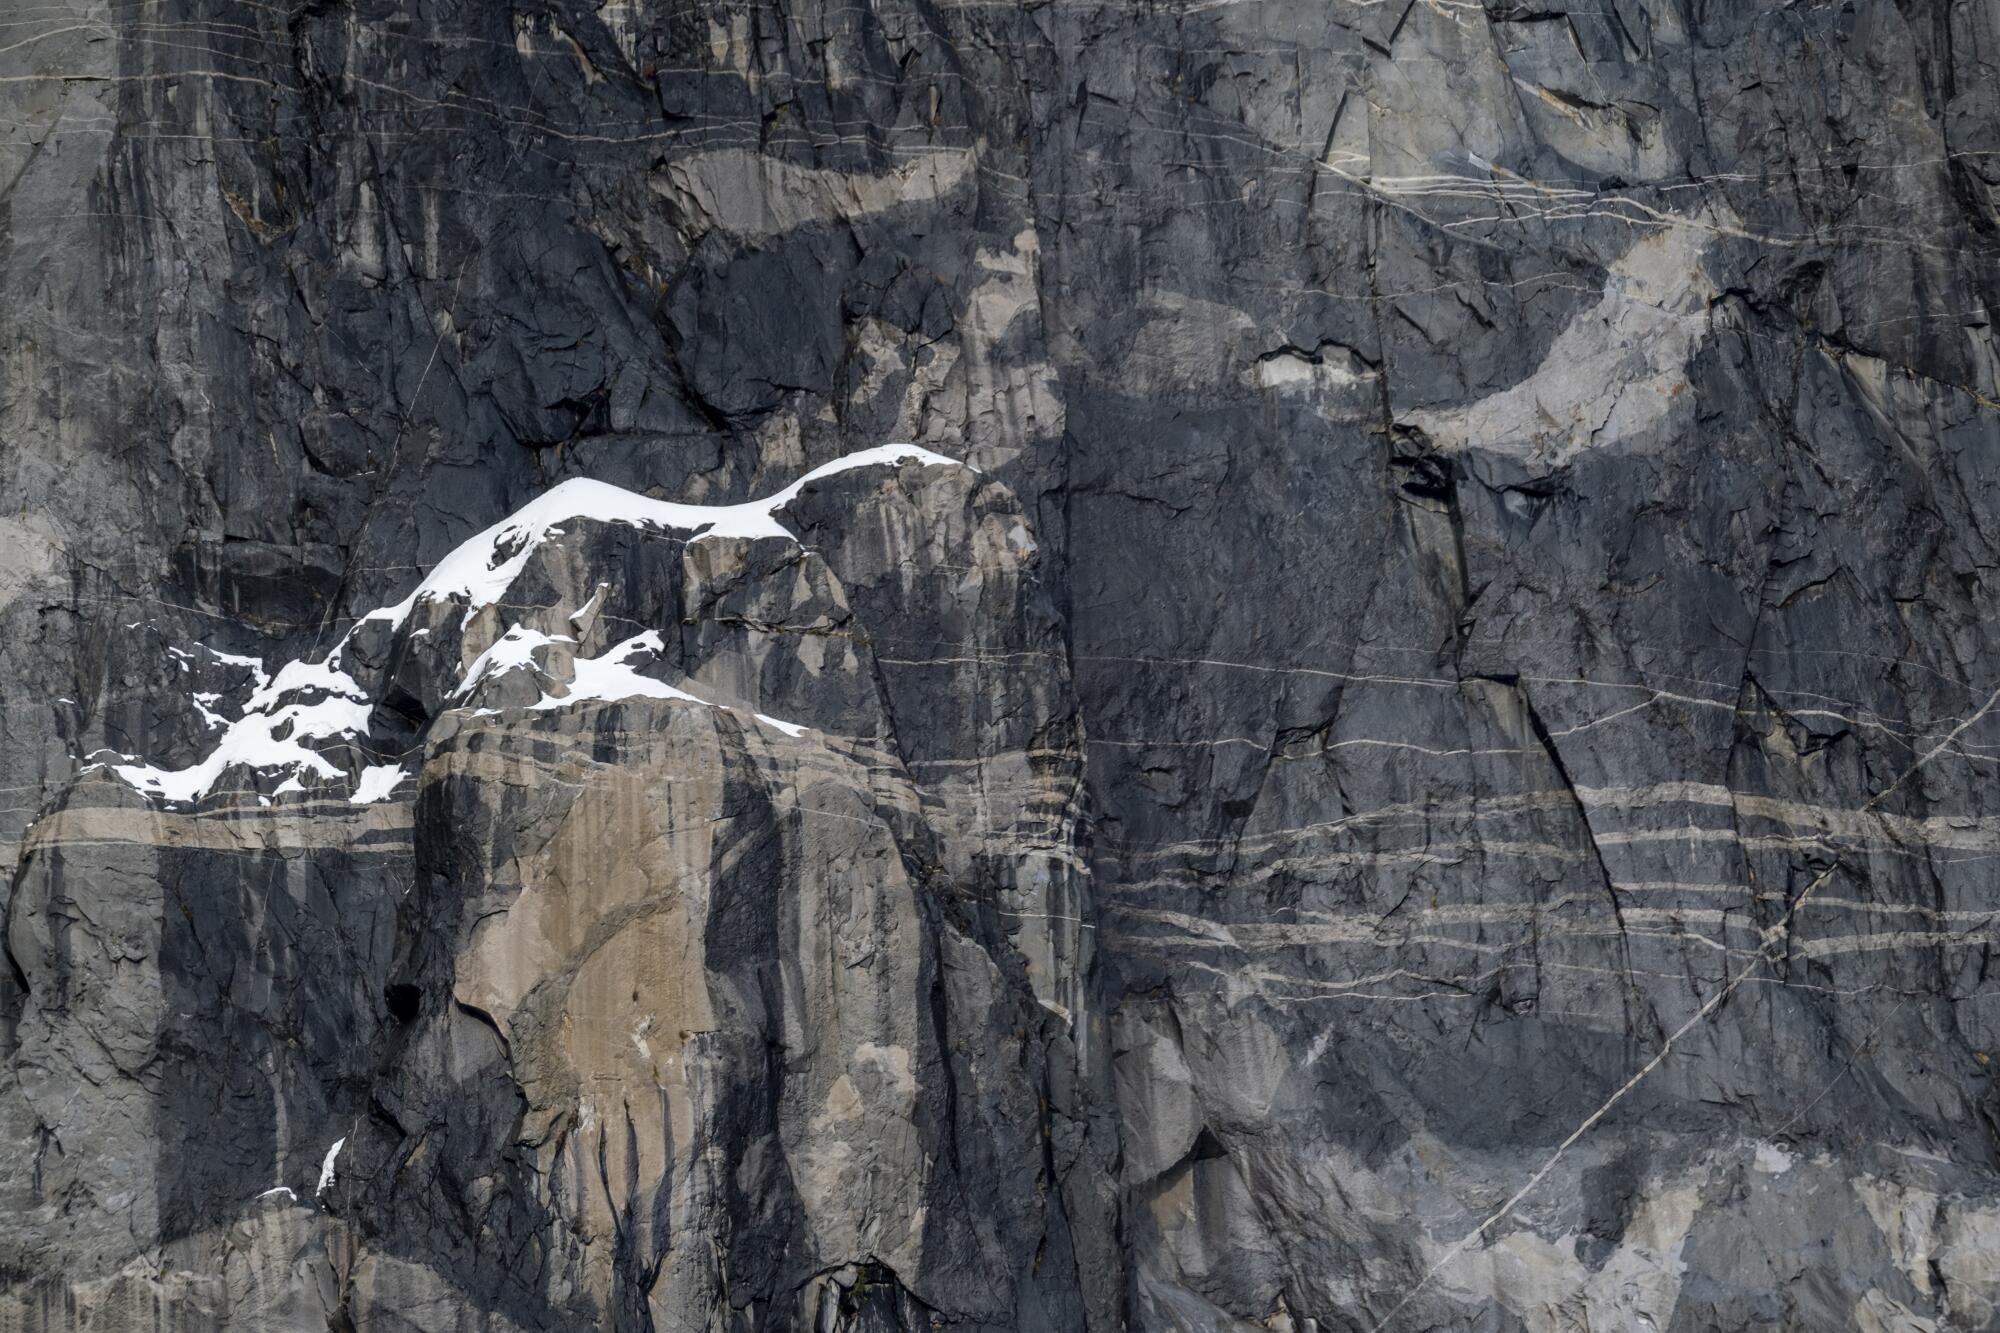 Snow clings to the steep granite rock walls of El Capitan.